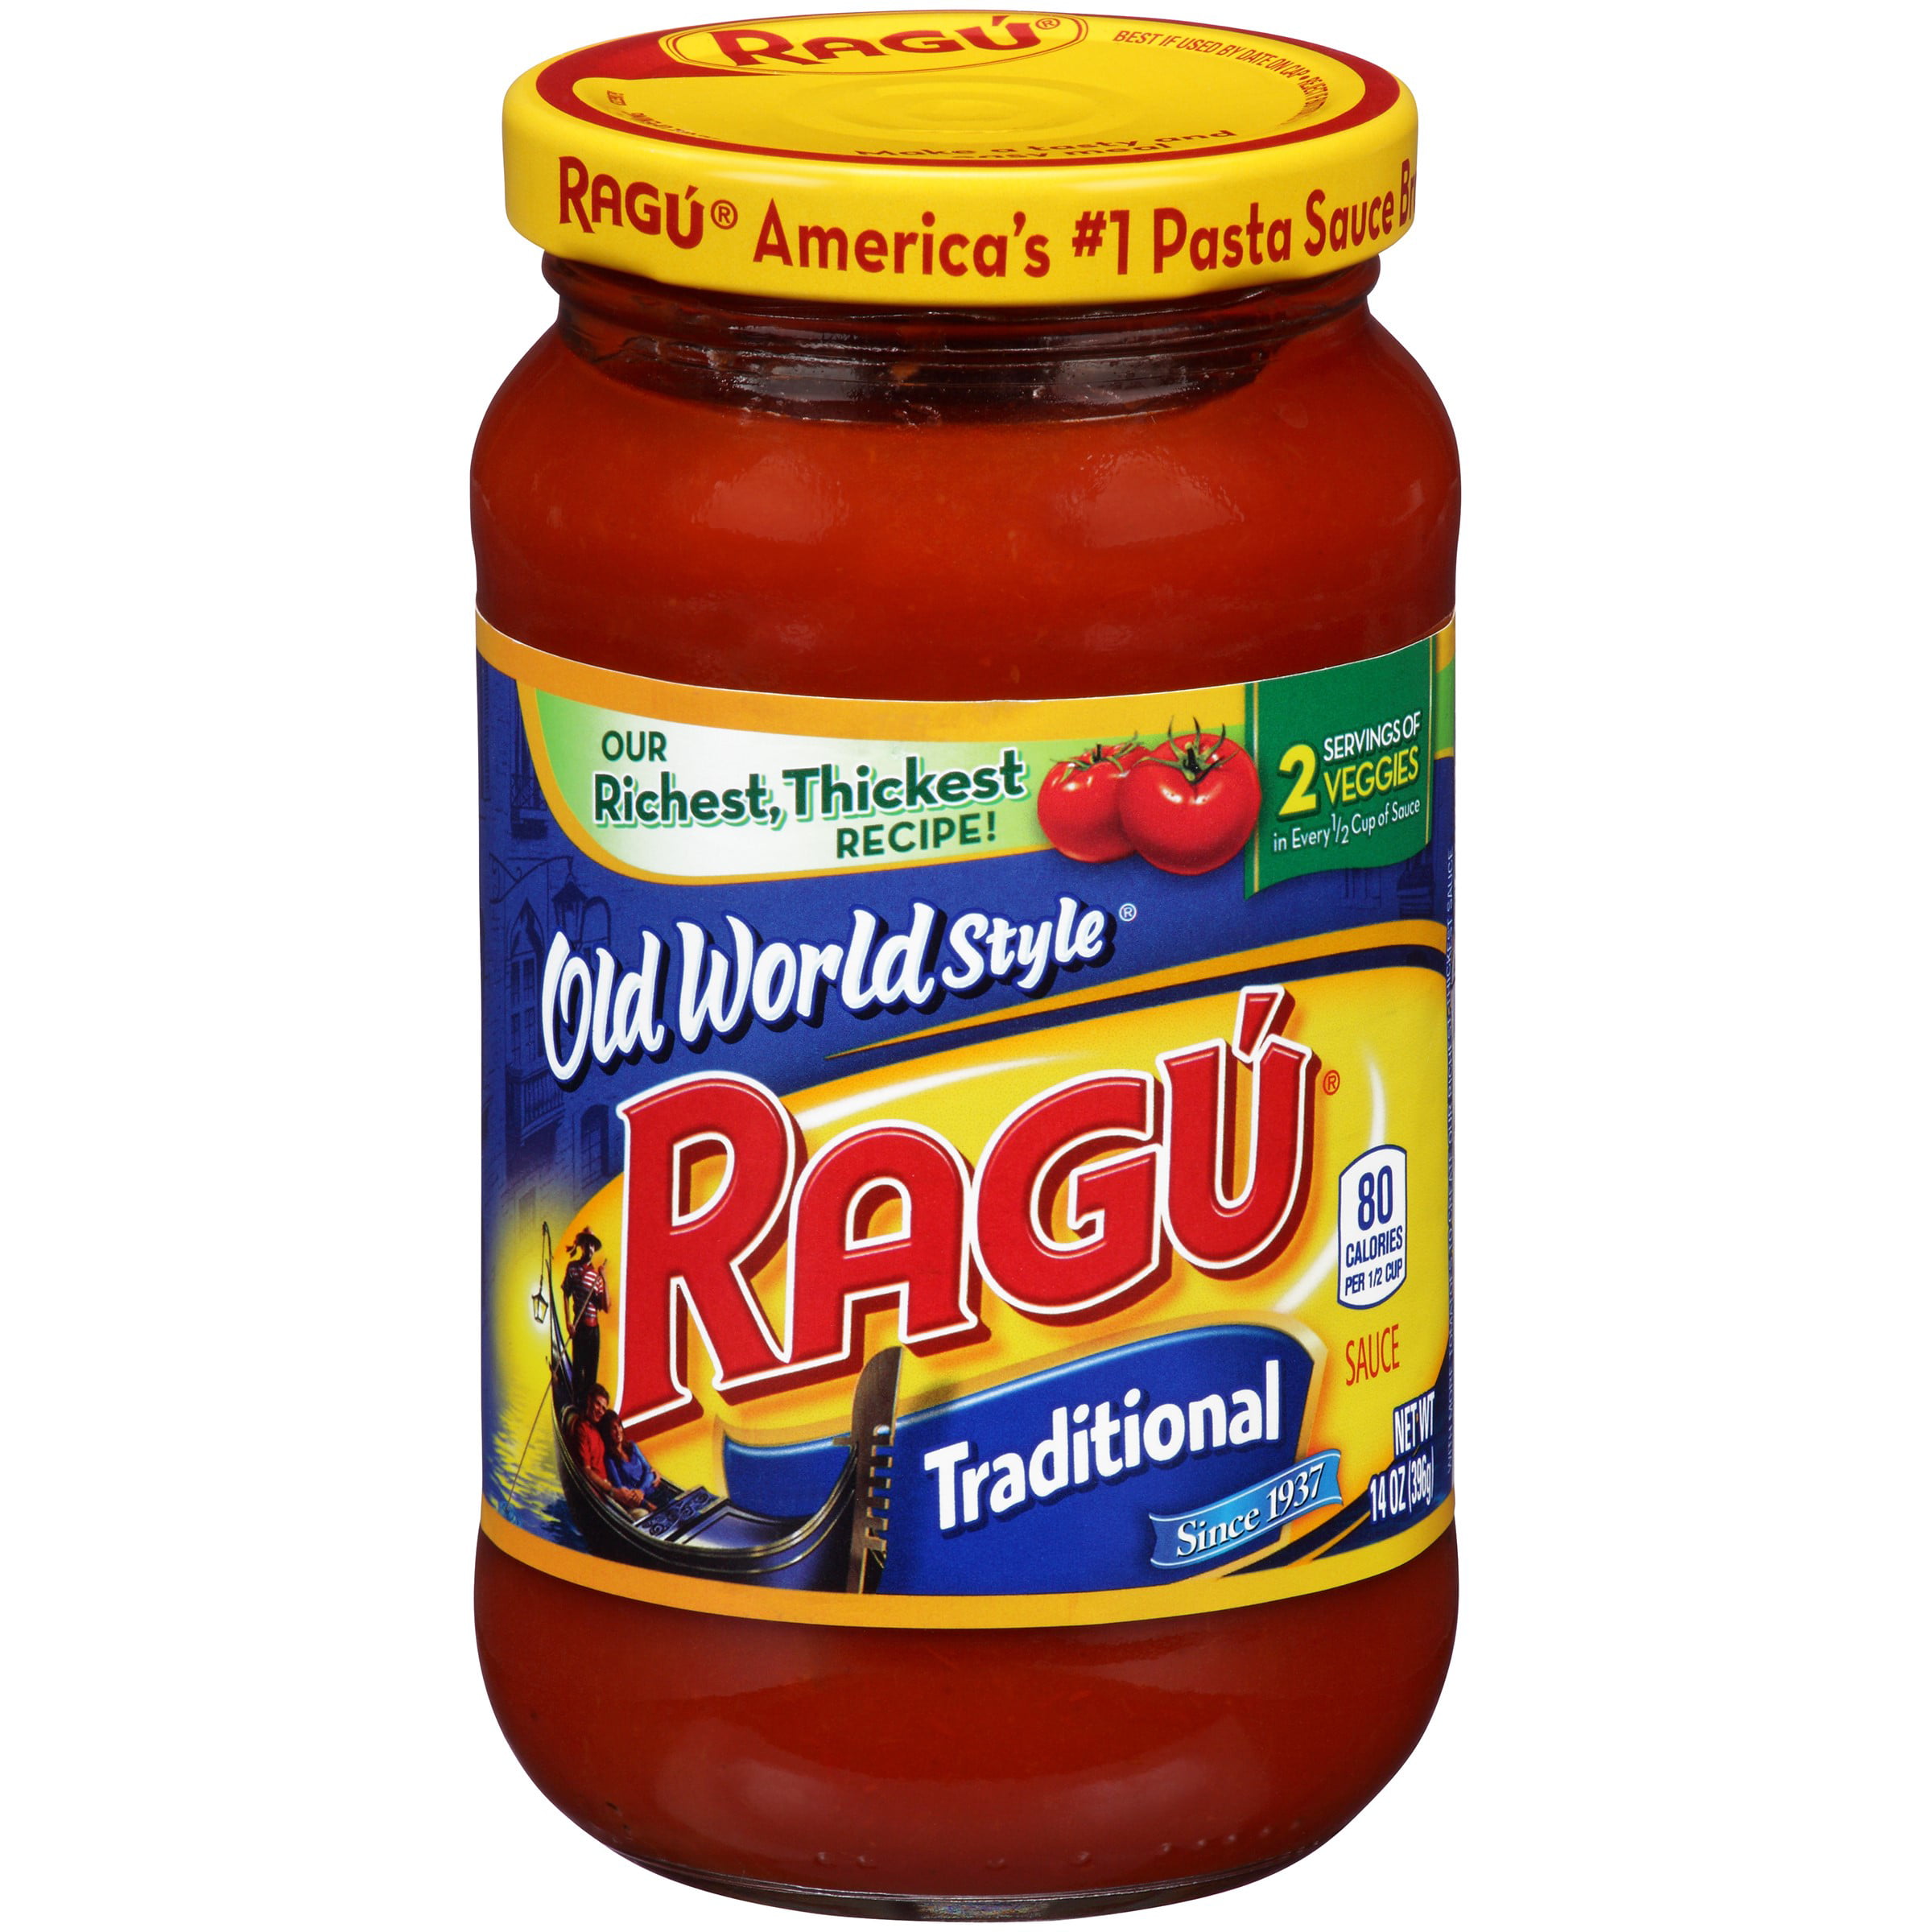 ragu-old-world-style-pasta-sauce-traditional-14-oz-walmart